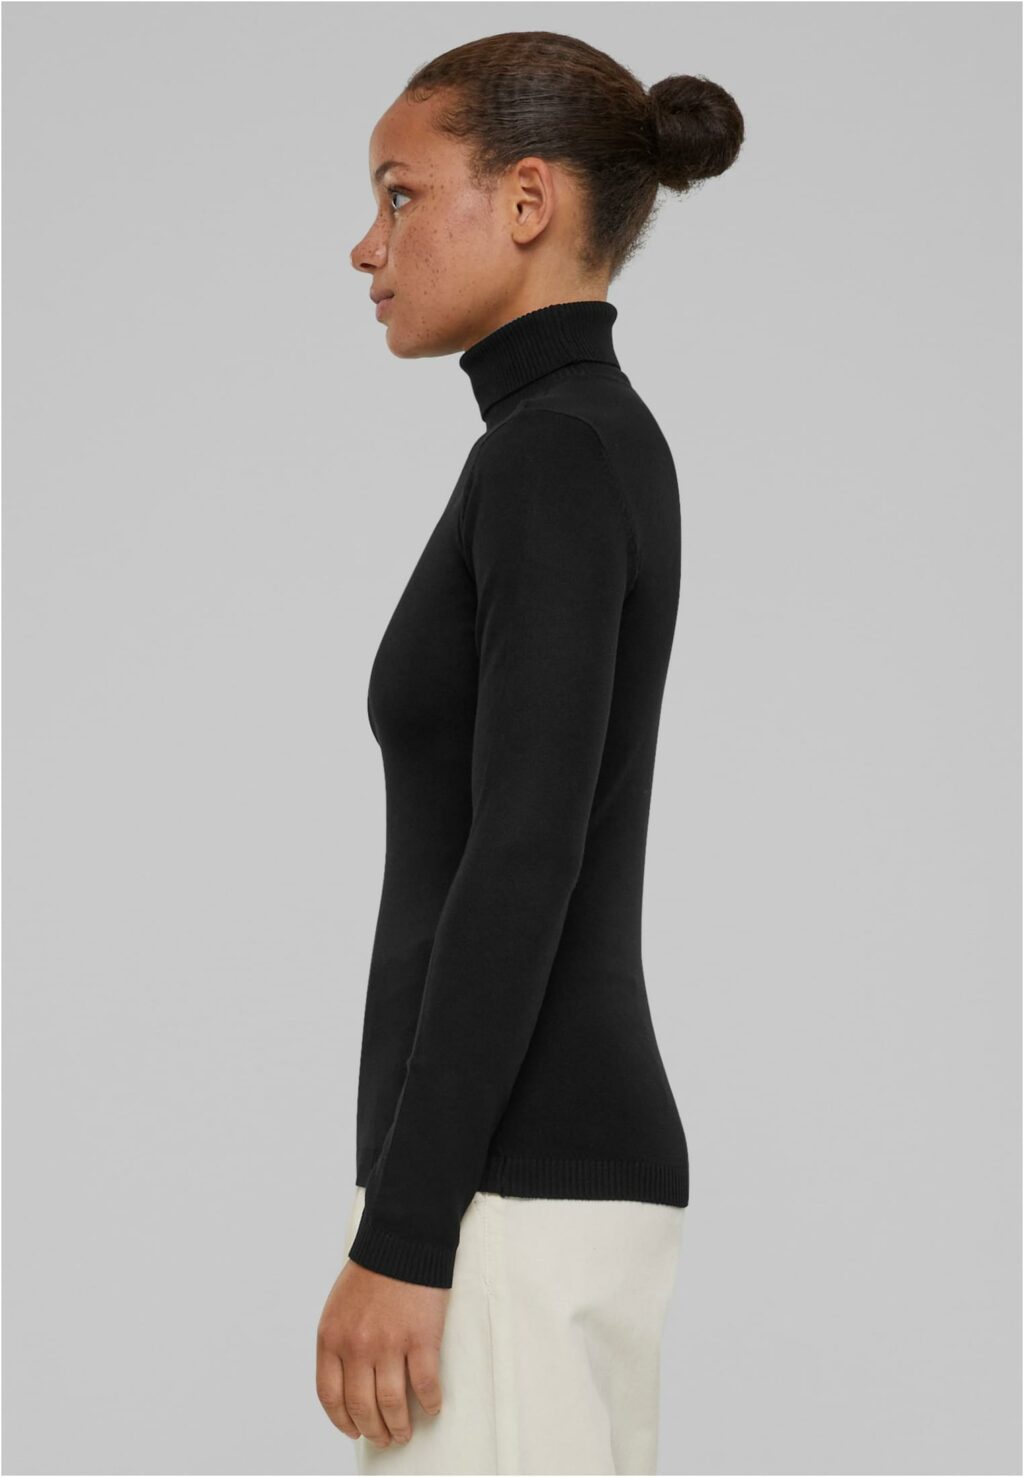 Urban Classics Ladies Knitted Turtleneck Sweater black TB6115